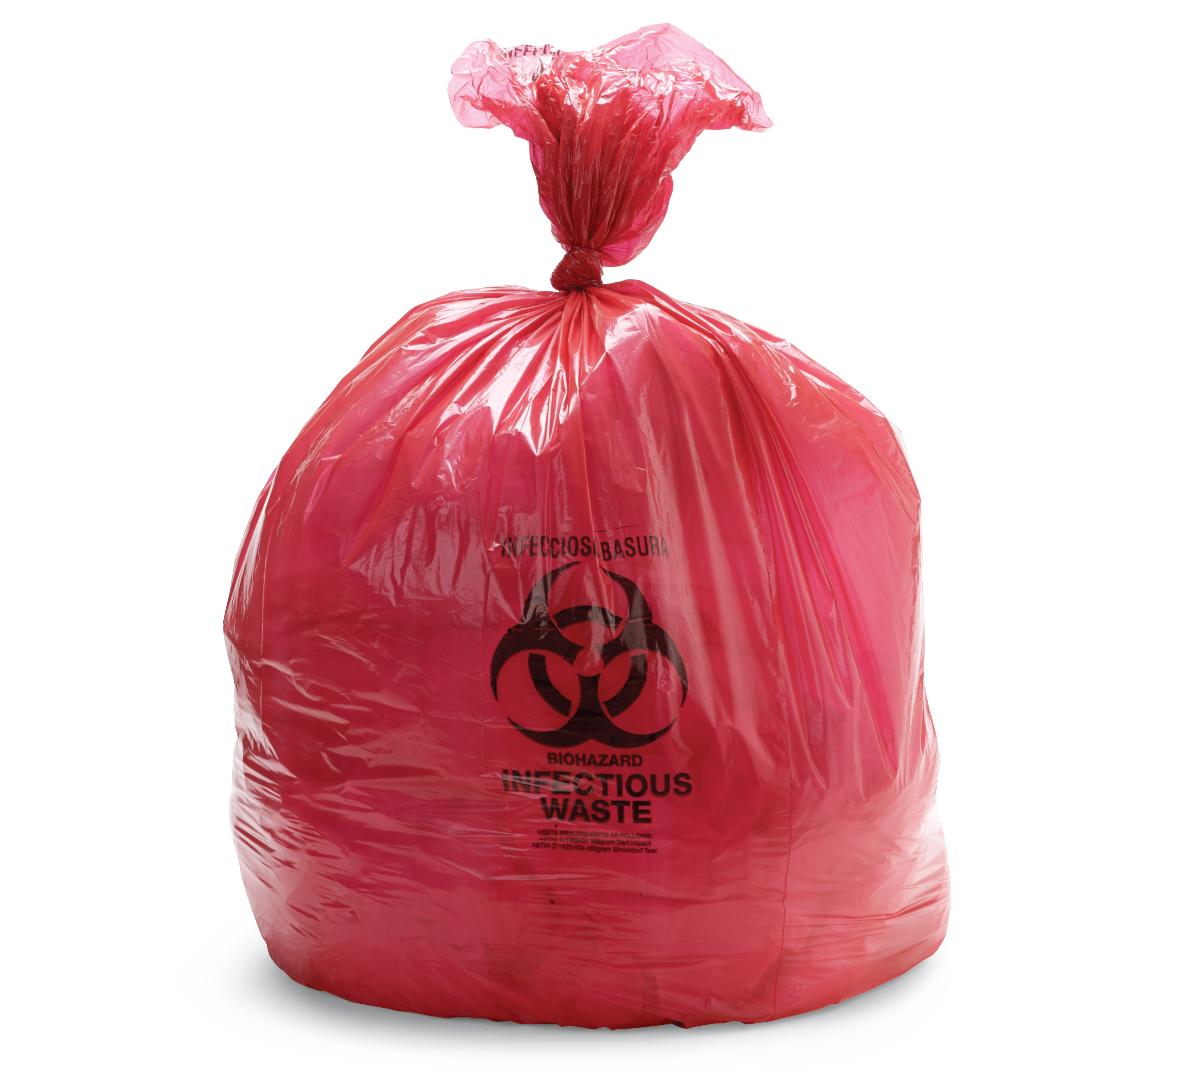 50 Each-Case / Red / Polyethylene Housekeeping - MEDLINE - Wasatch Medical Supply